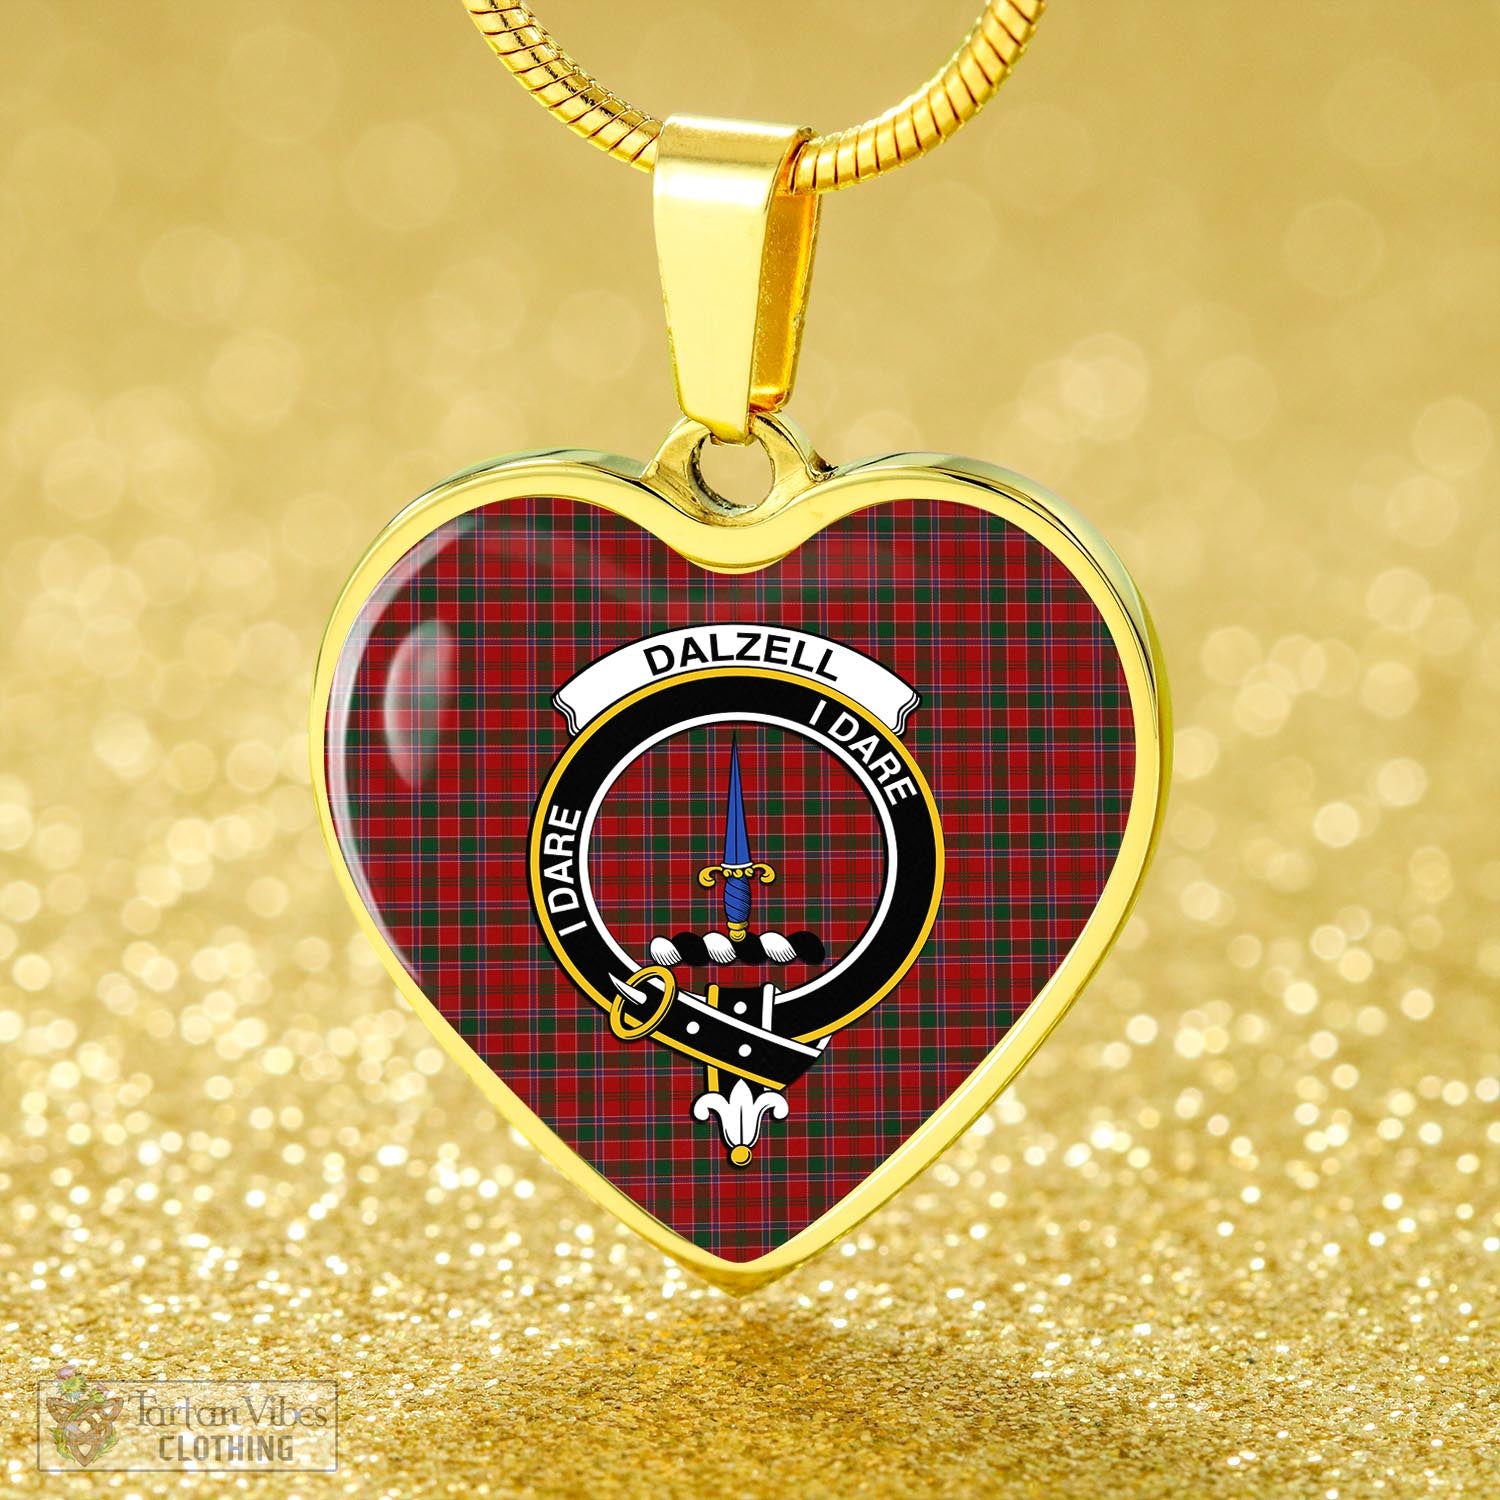 Tartan Vibes Clothing Dalzell (Dalziel) Tartan Heart Necklace with Family Crest